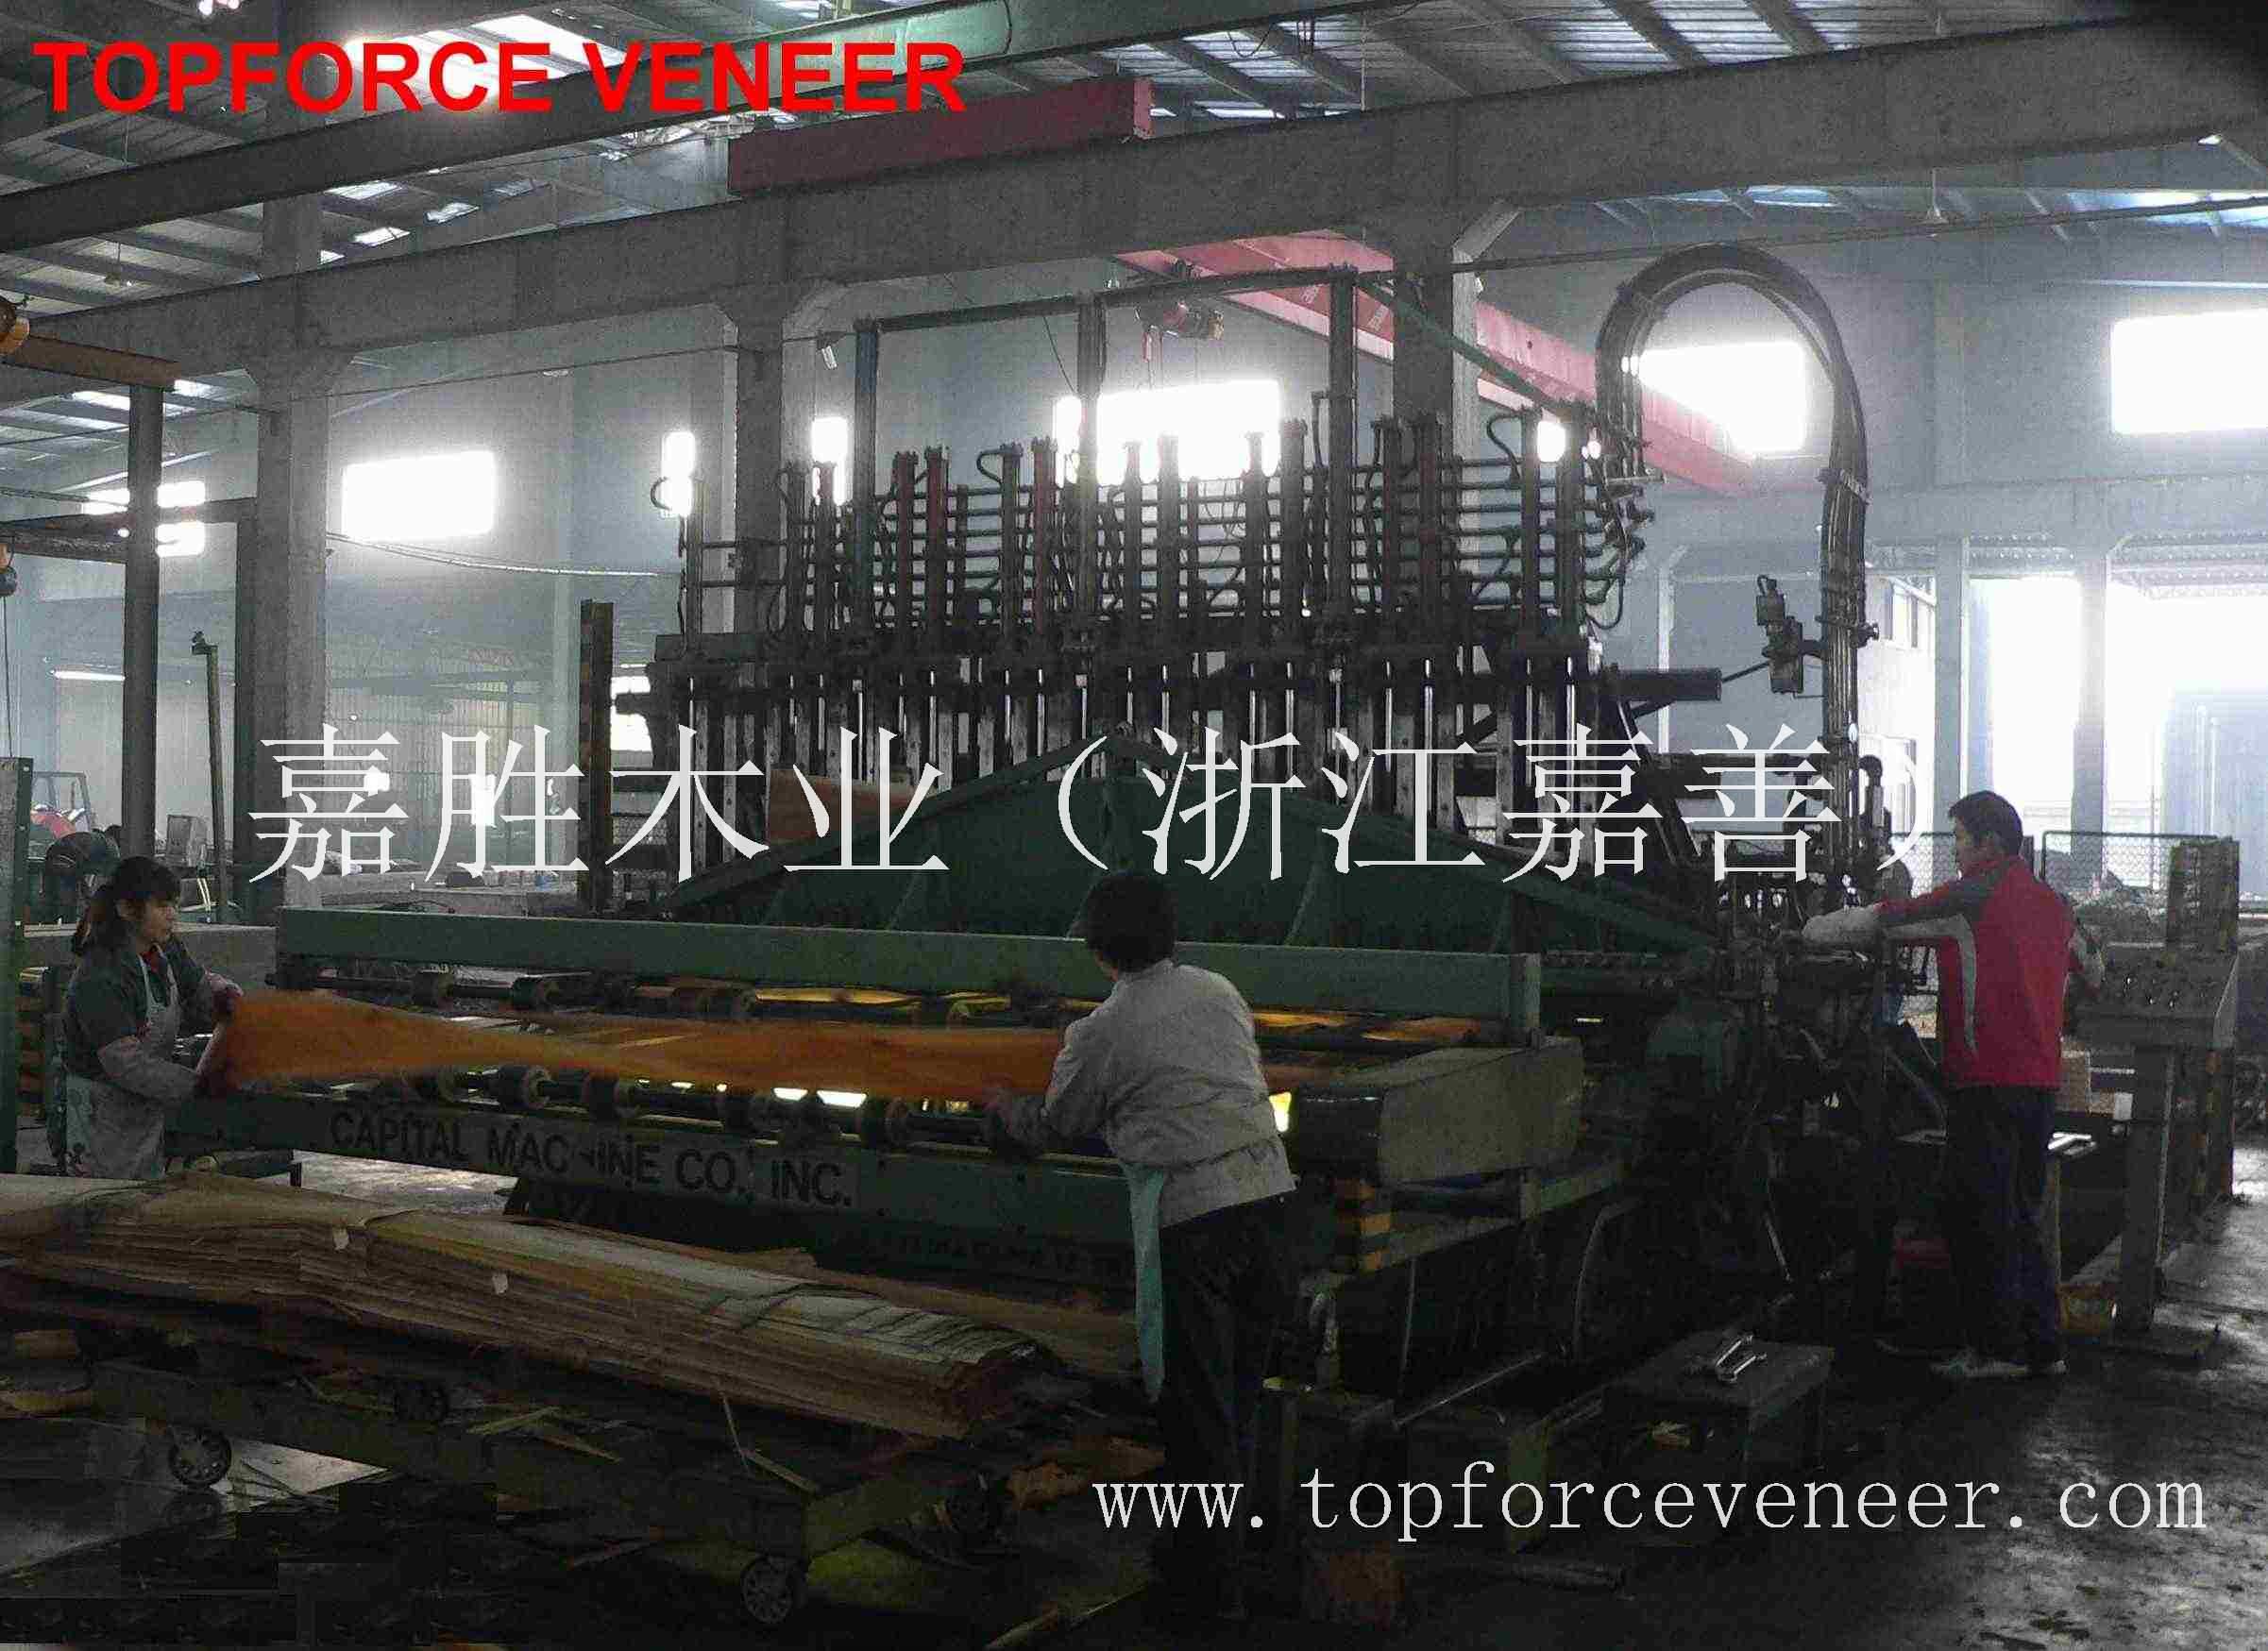 嘉善原木加工厂 JiaShan Veneer Logs Saw Logs Cutting Slicing Factory